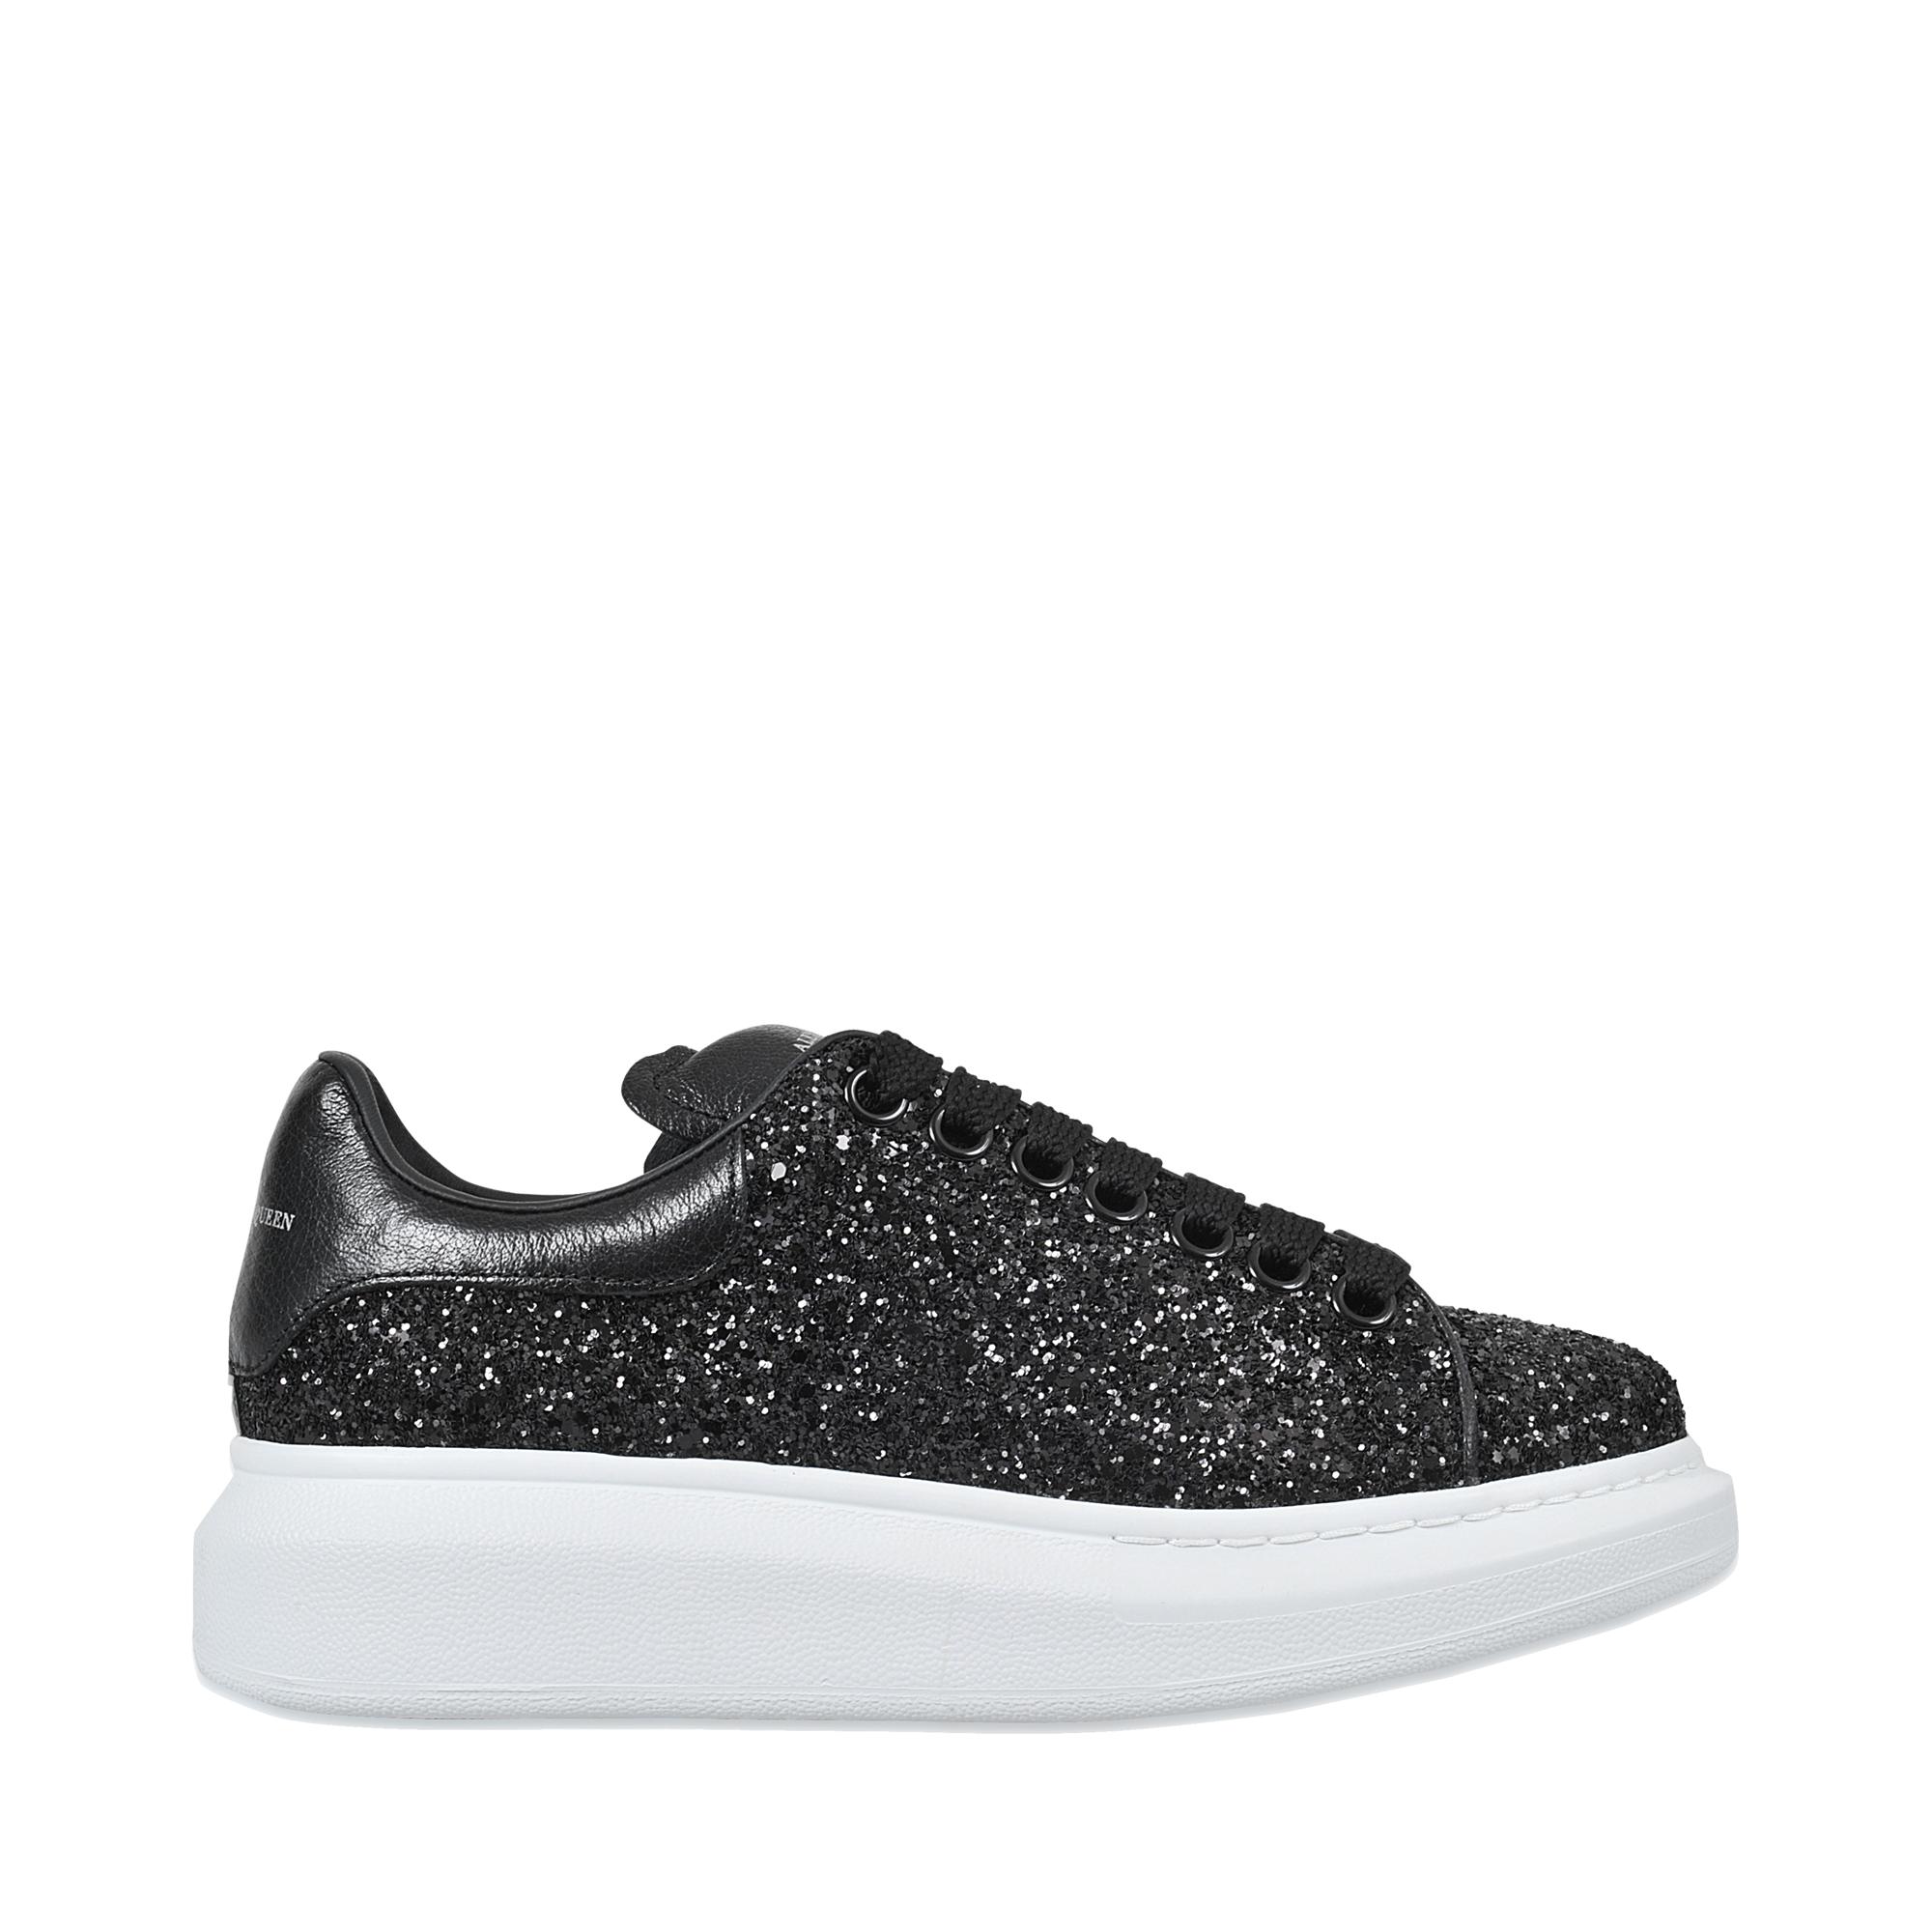 Alexander mcqueen Oversize Glittered Sneaker in Black | Lyst